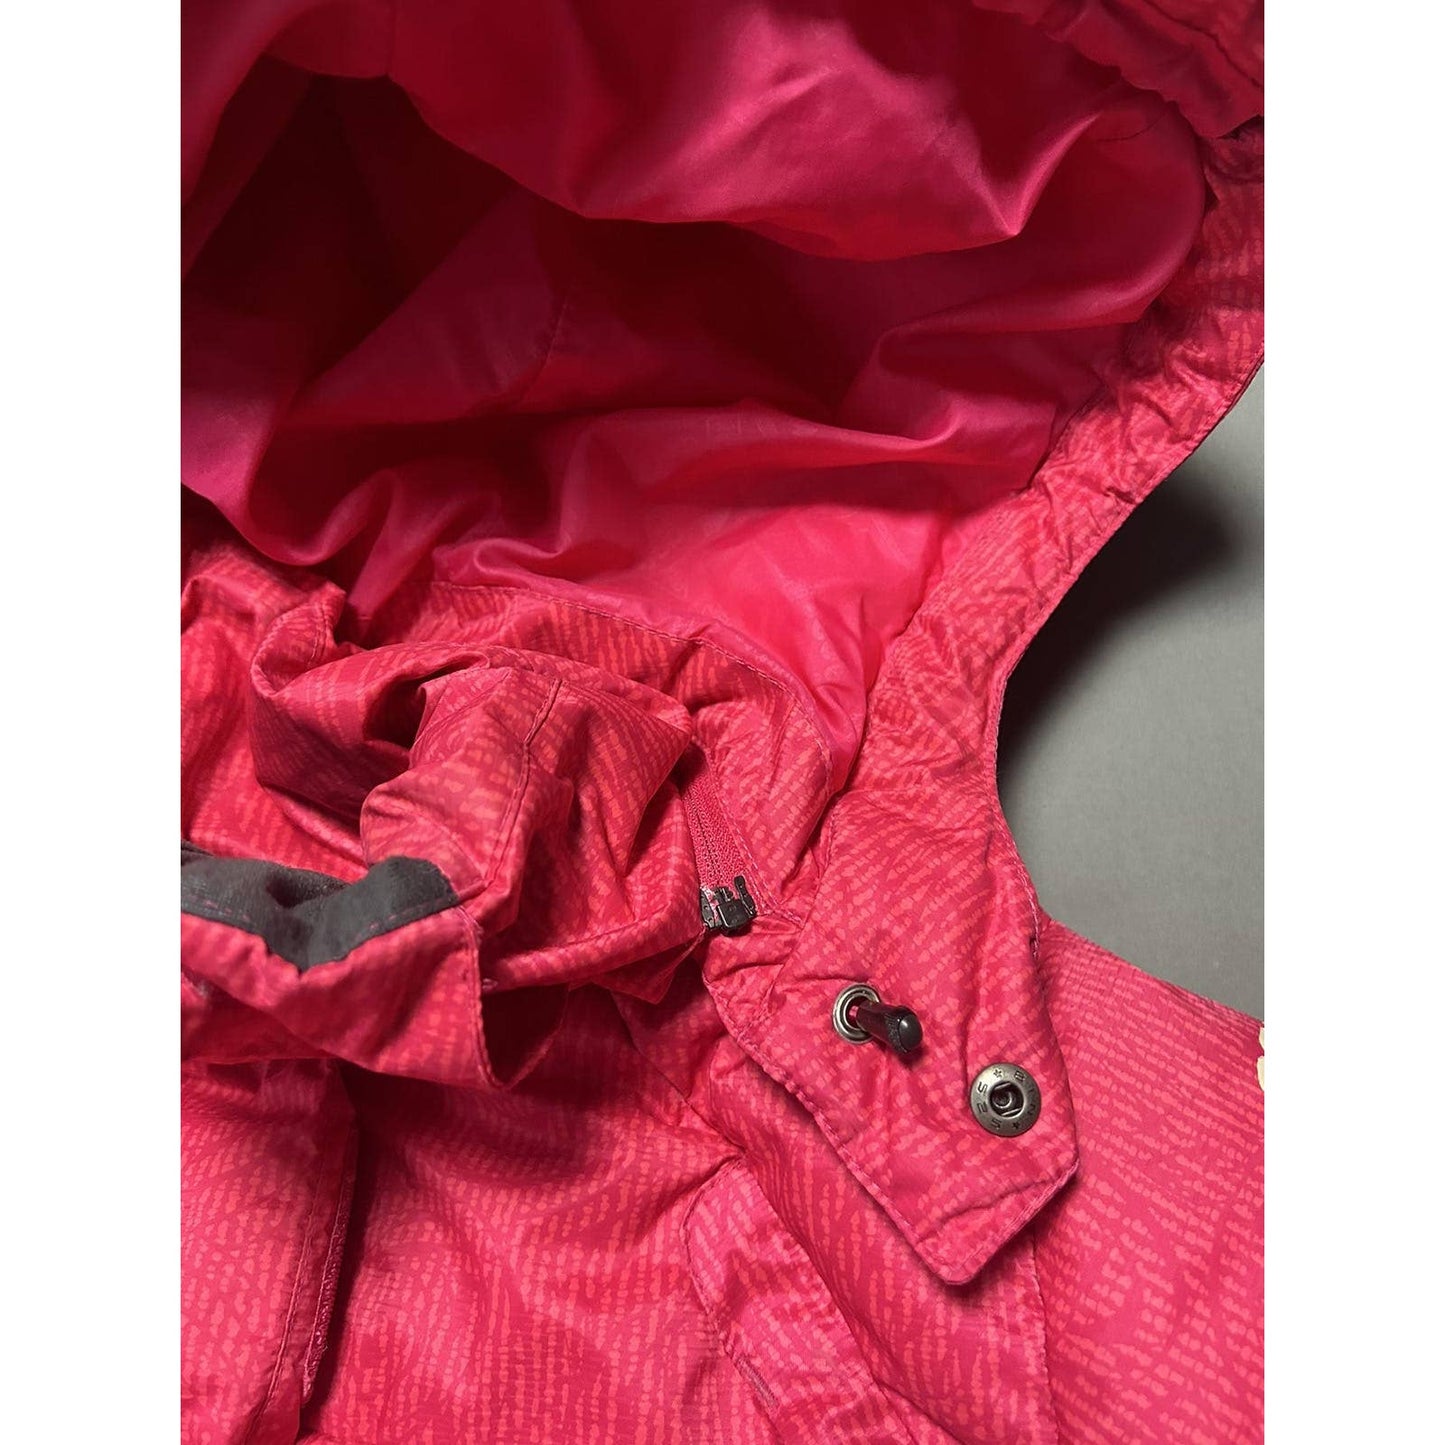 Nike ACG vintage pink puffer jacket small logo